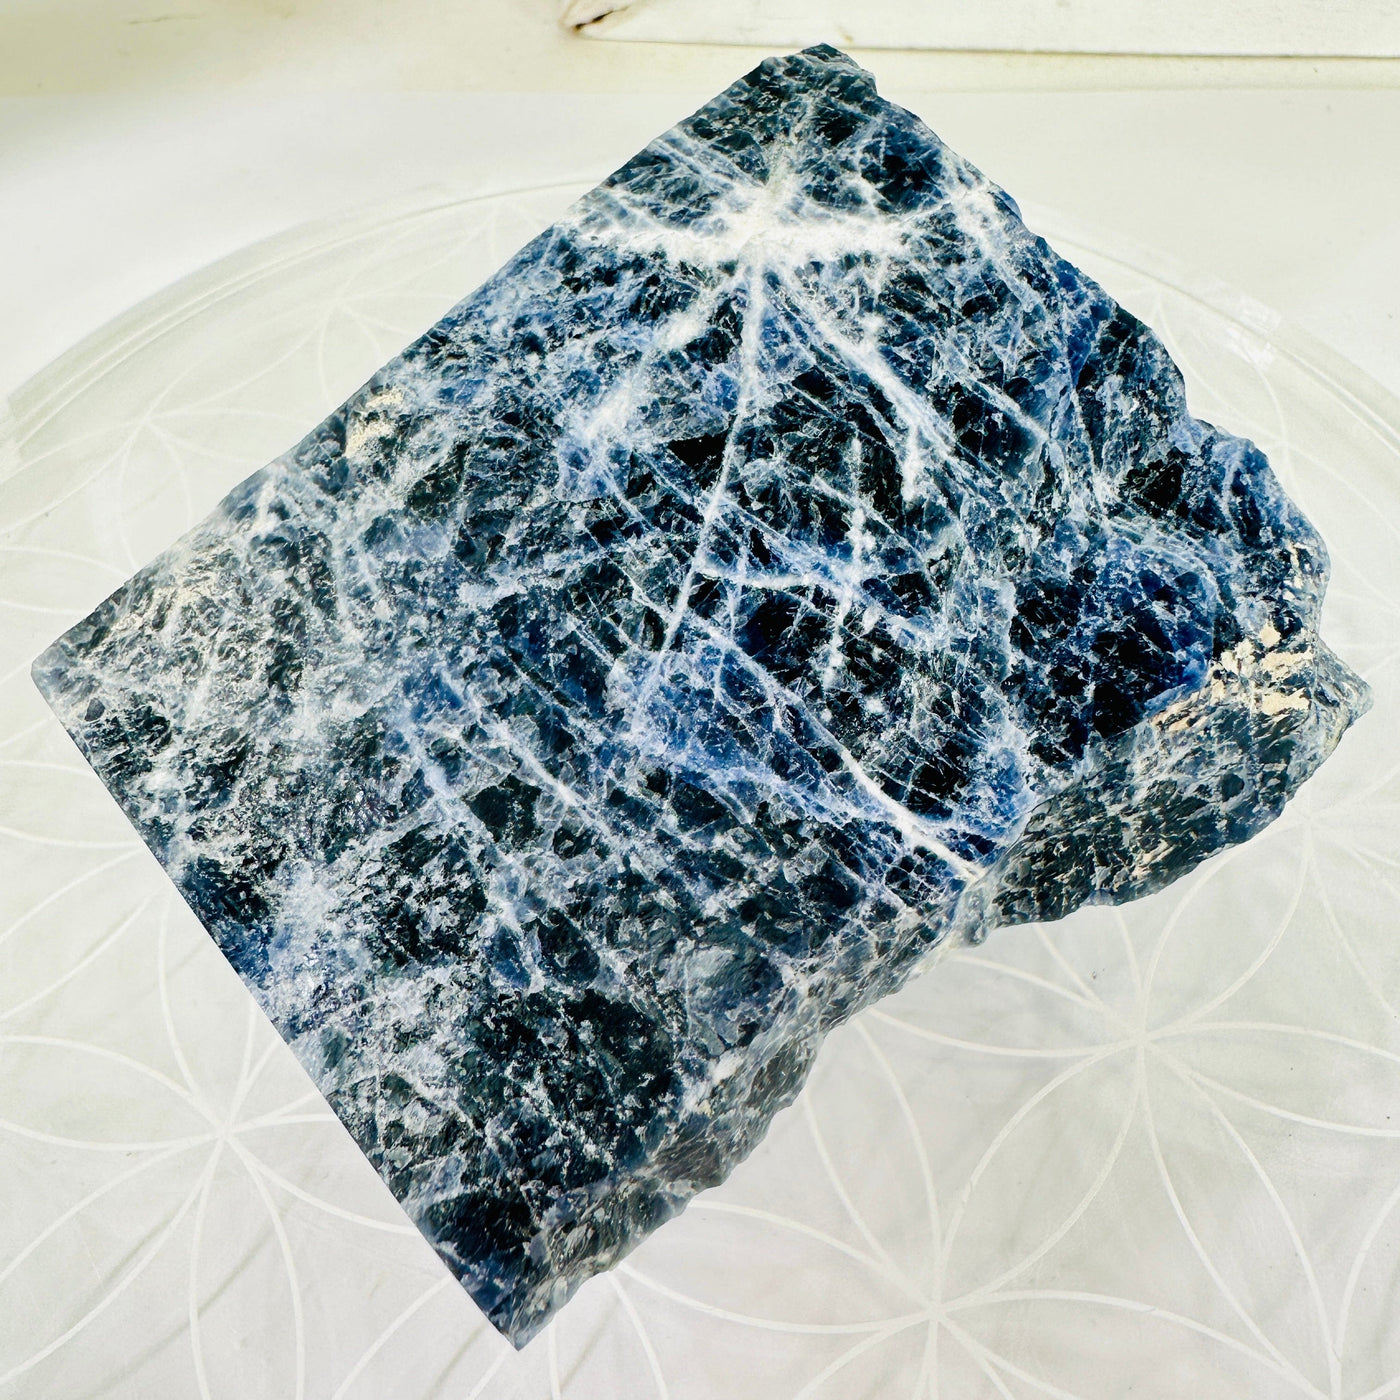  Sodalite Chunk - Rough Crystal closeup to show detail